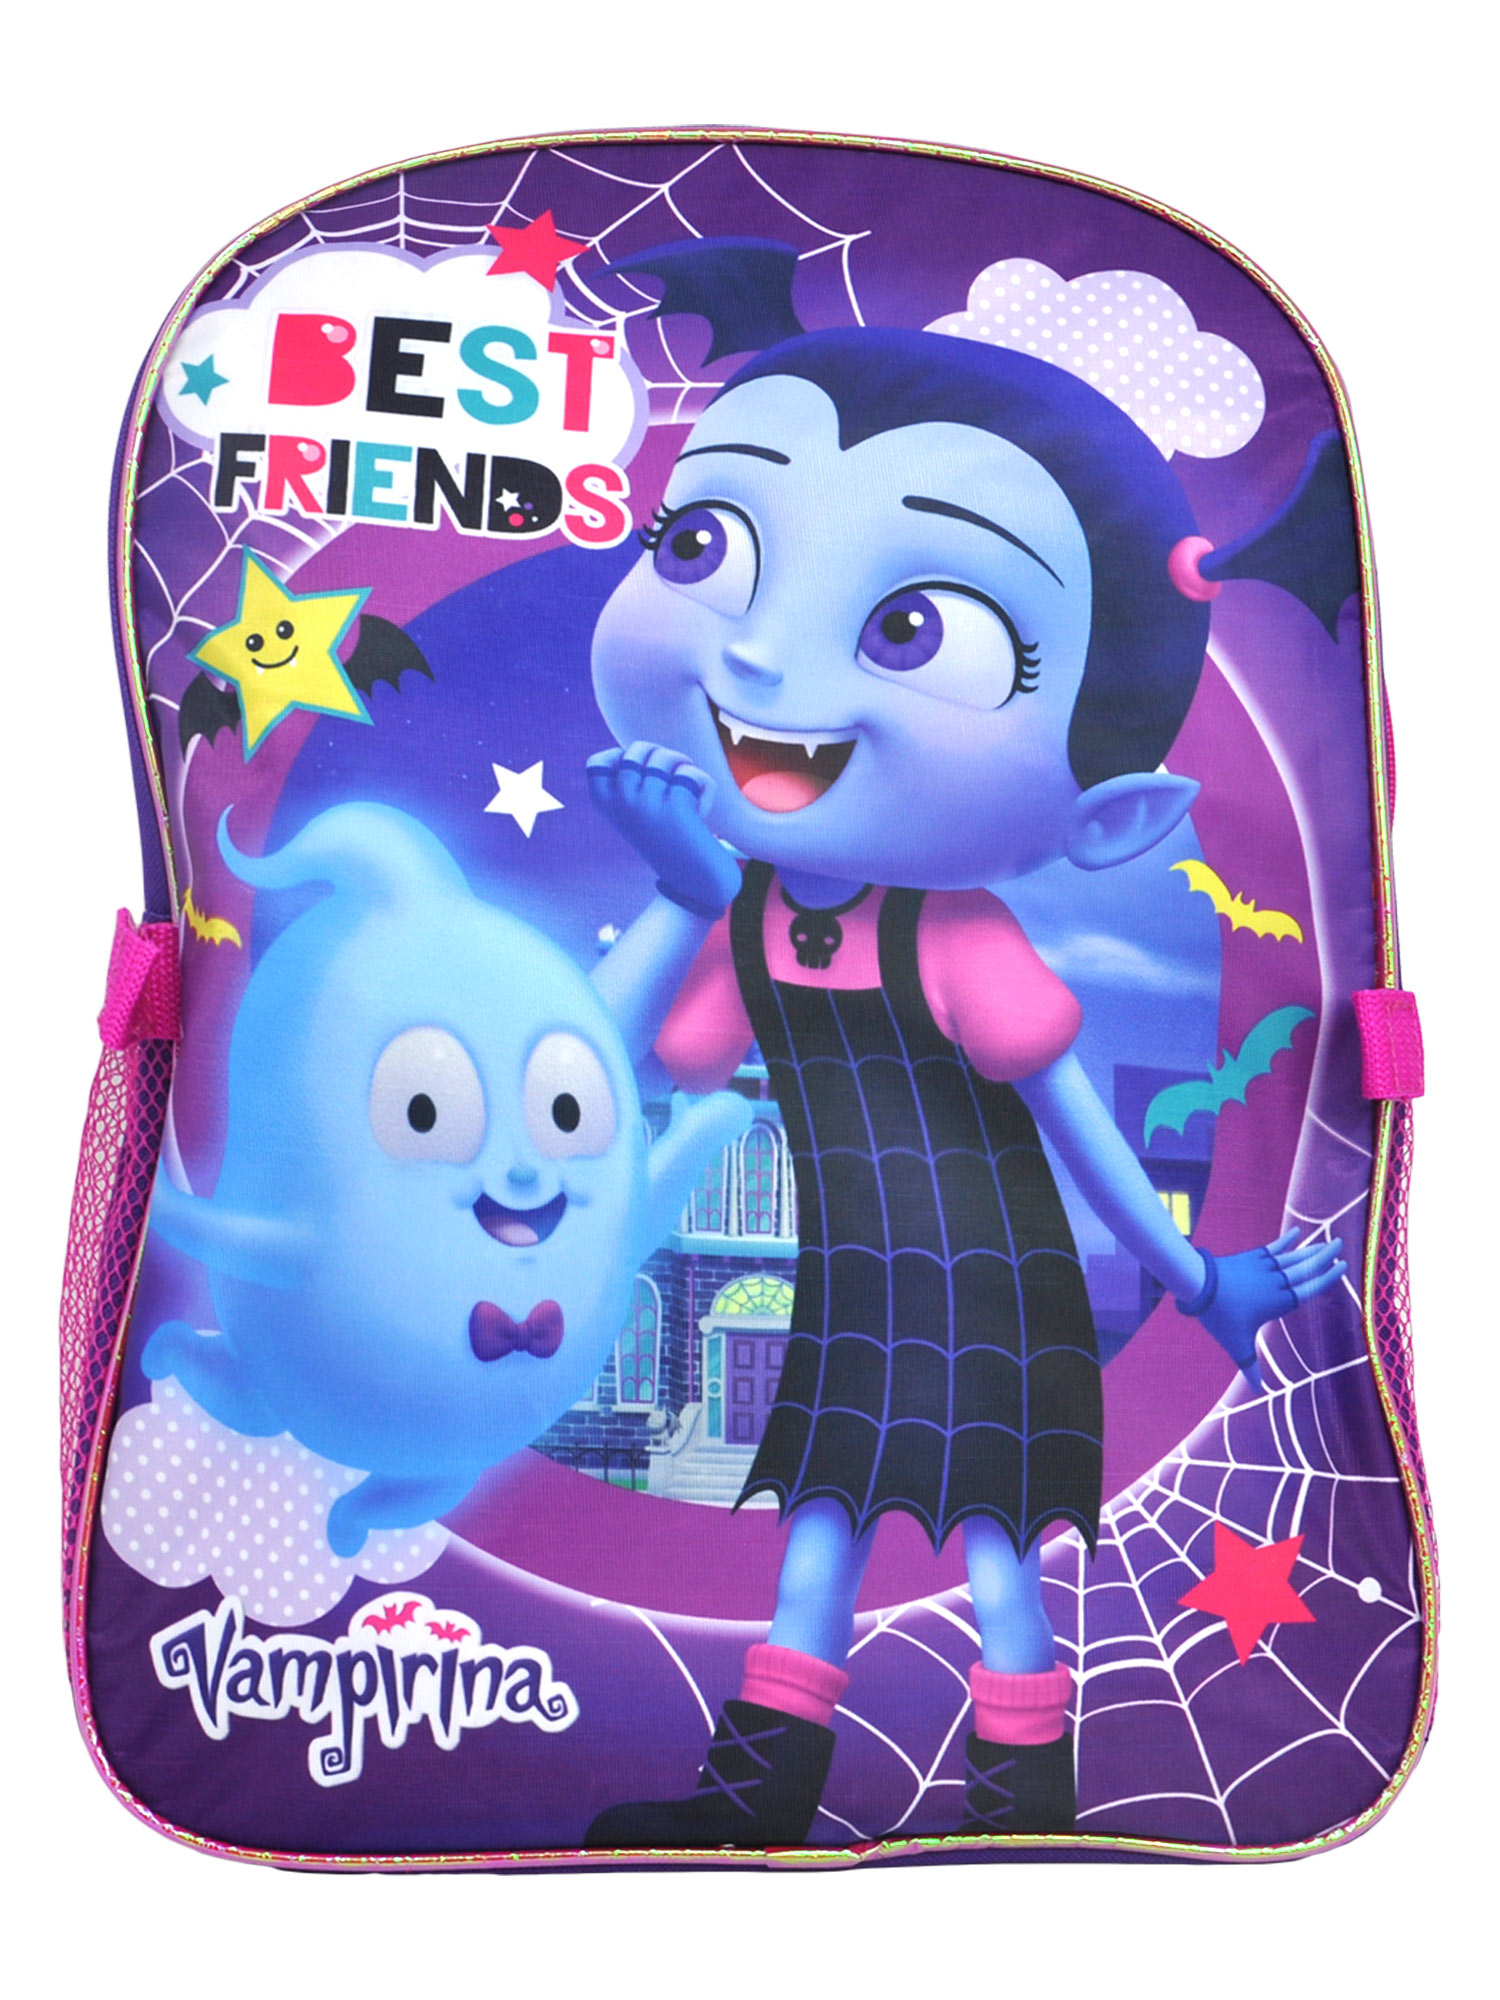 Girls Vampirina Best Friends Backpack 16" w/ Detachable Lunch Bag Purple - image 4 of 6